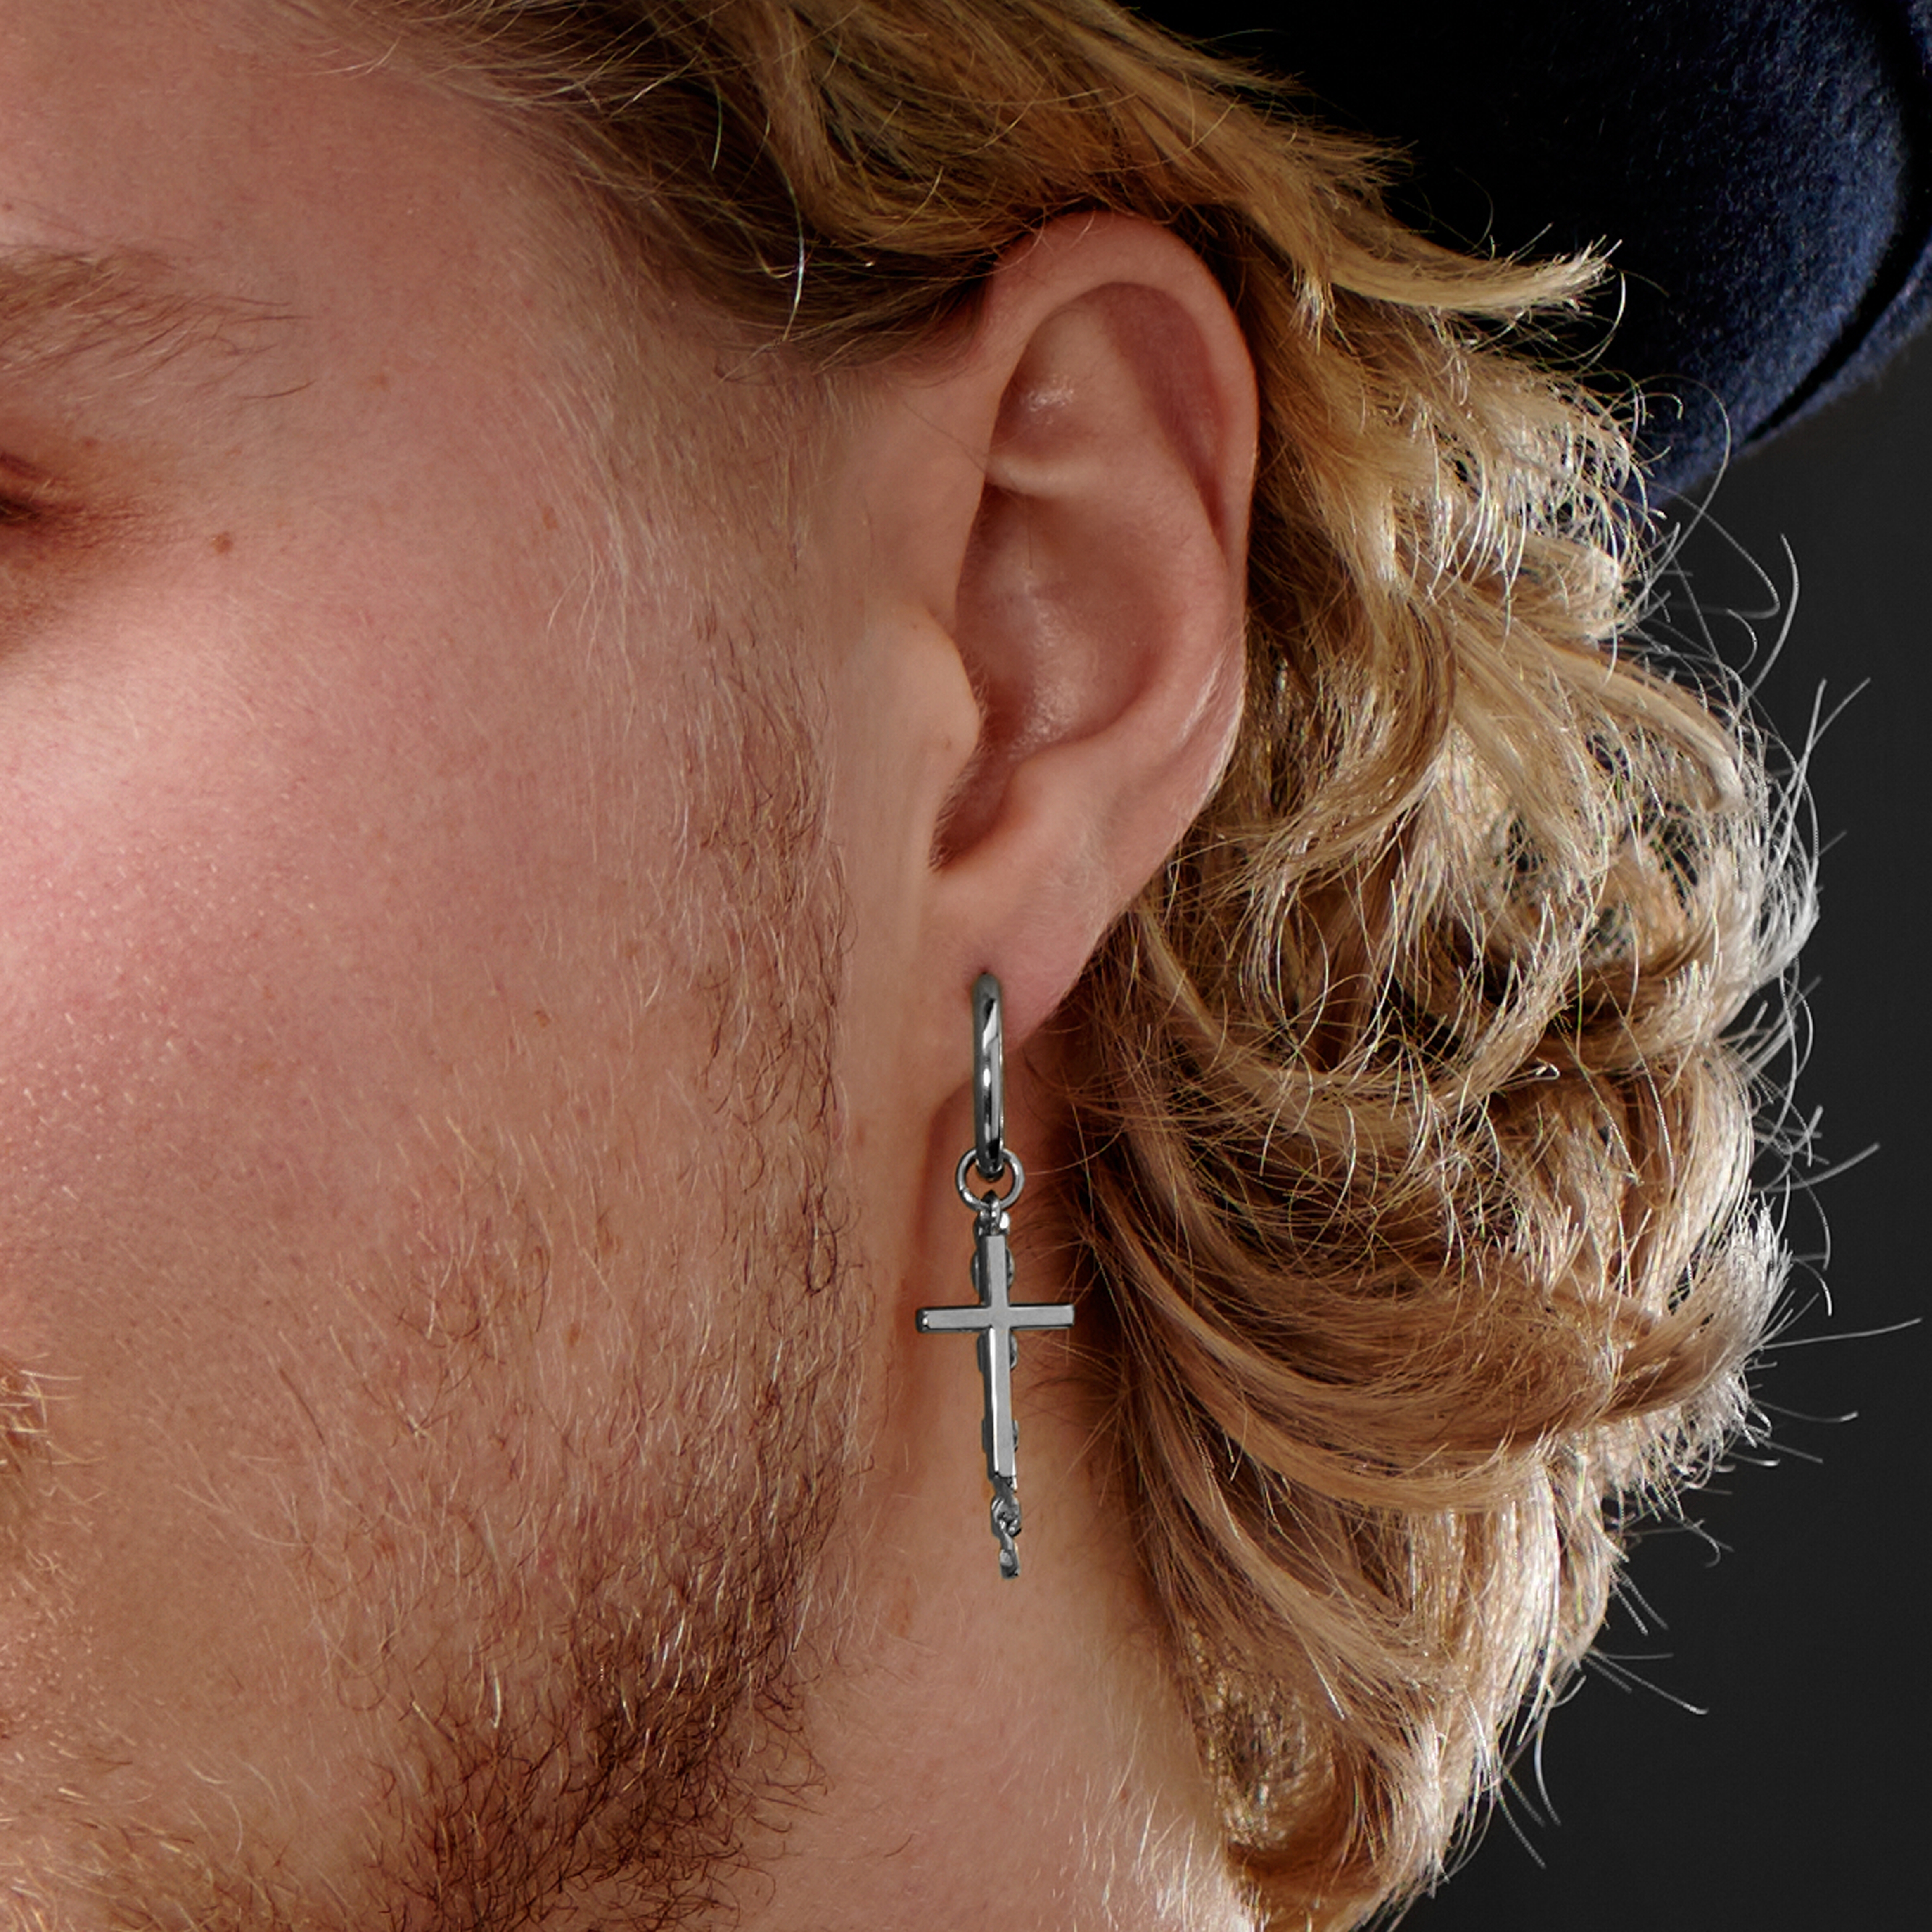 Cross Earrings Mens Huggie Hoop EarringsMens Stainless Steel Conch Hoop  Cross Earring Without Piercing  AliExpress